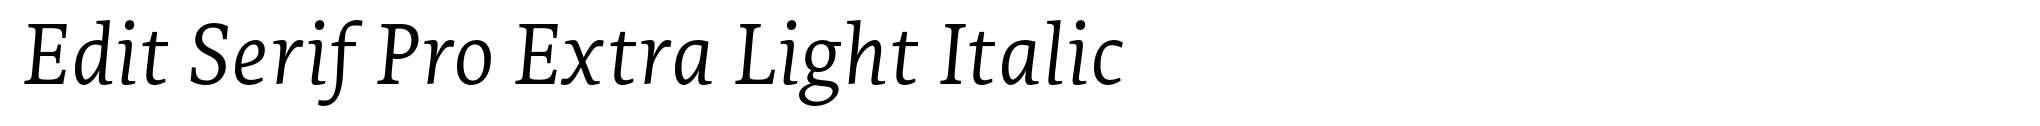 Edit Serif Pro Extra Light Italic image